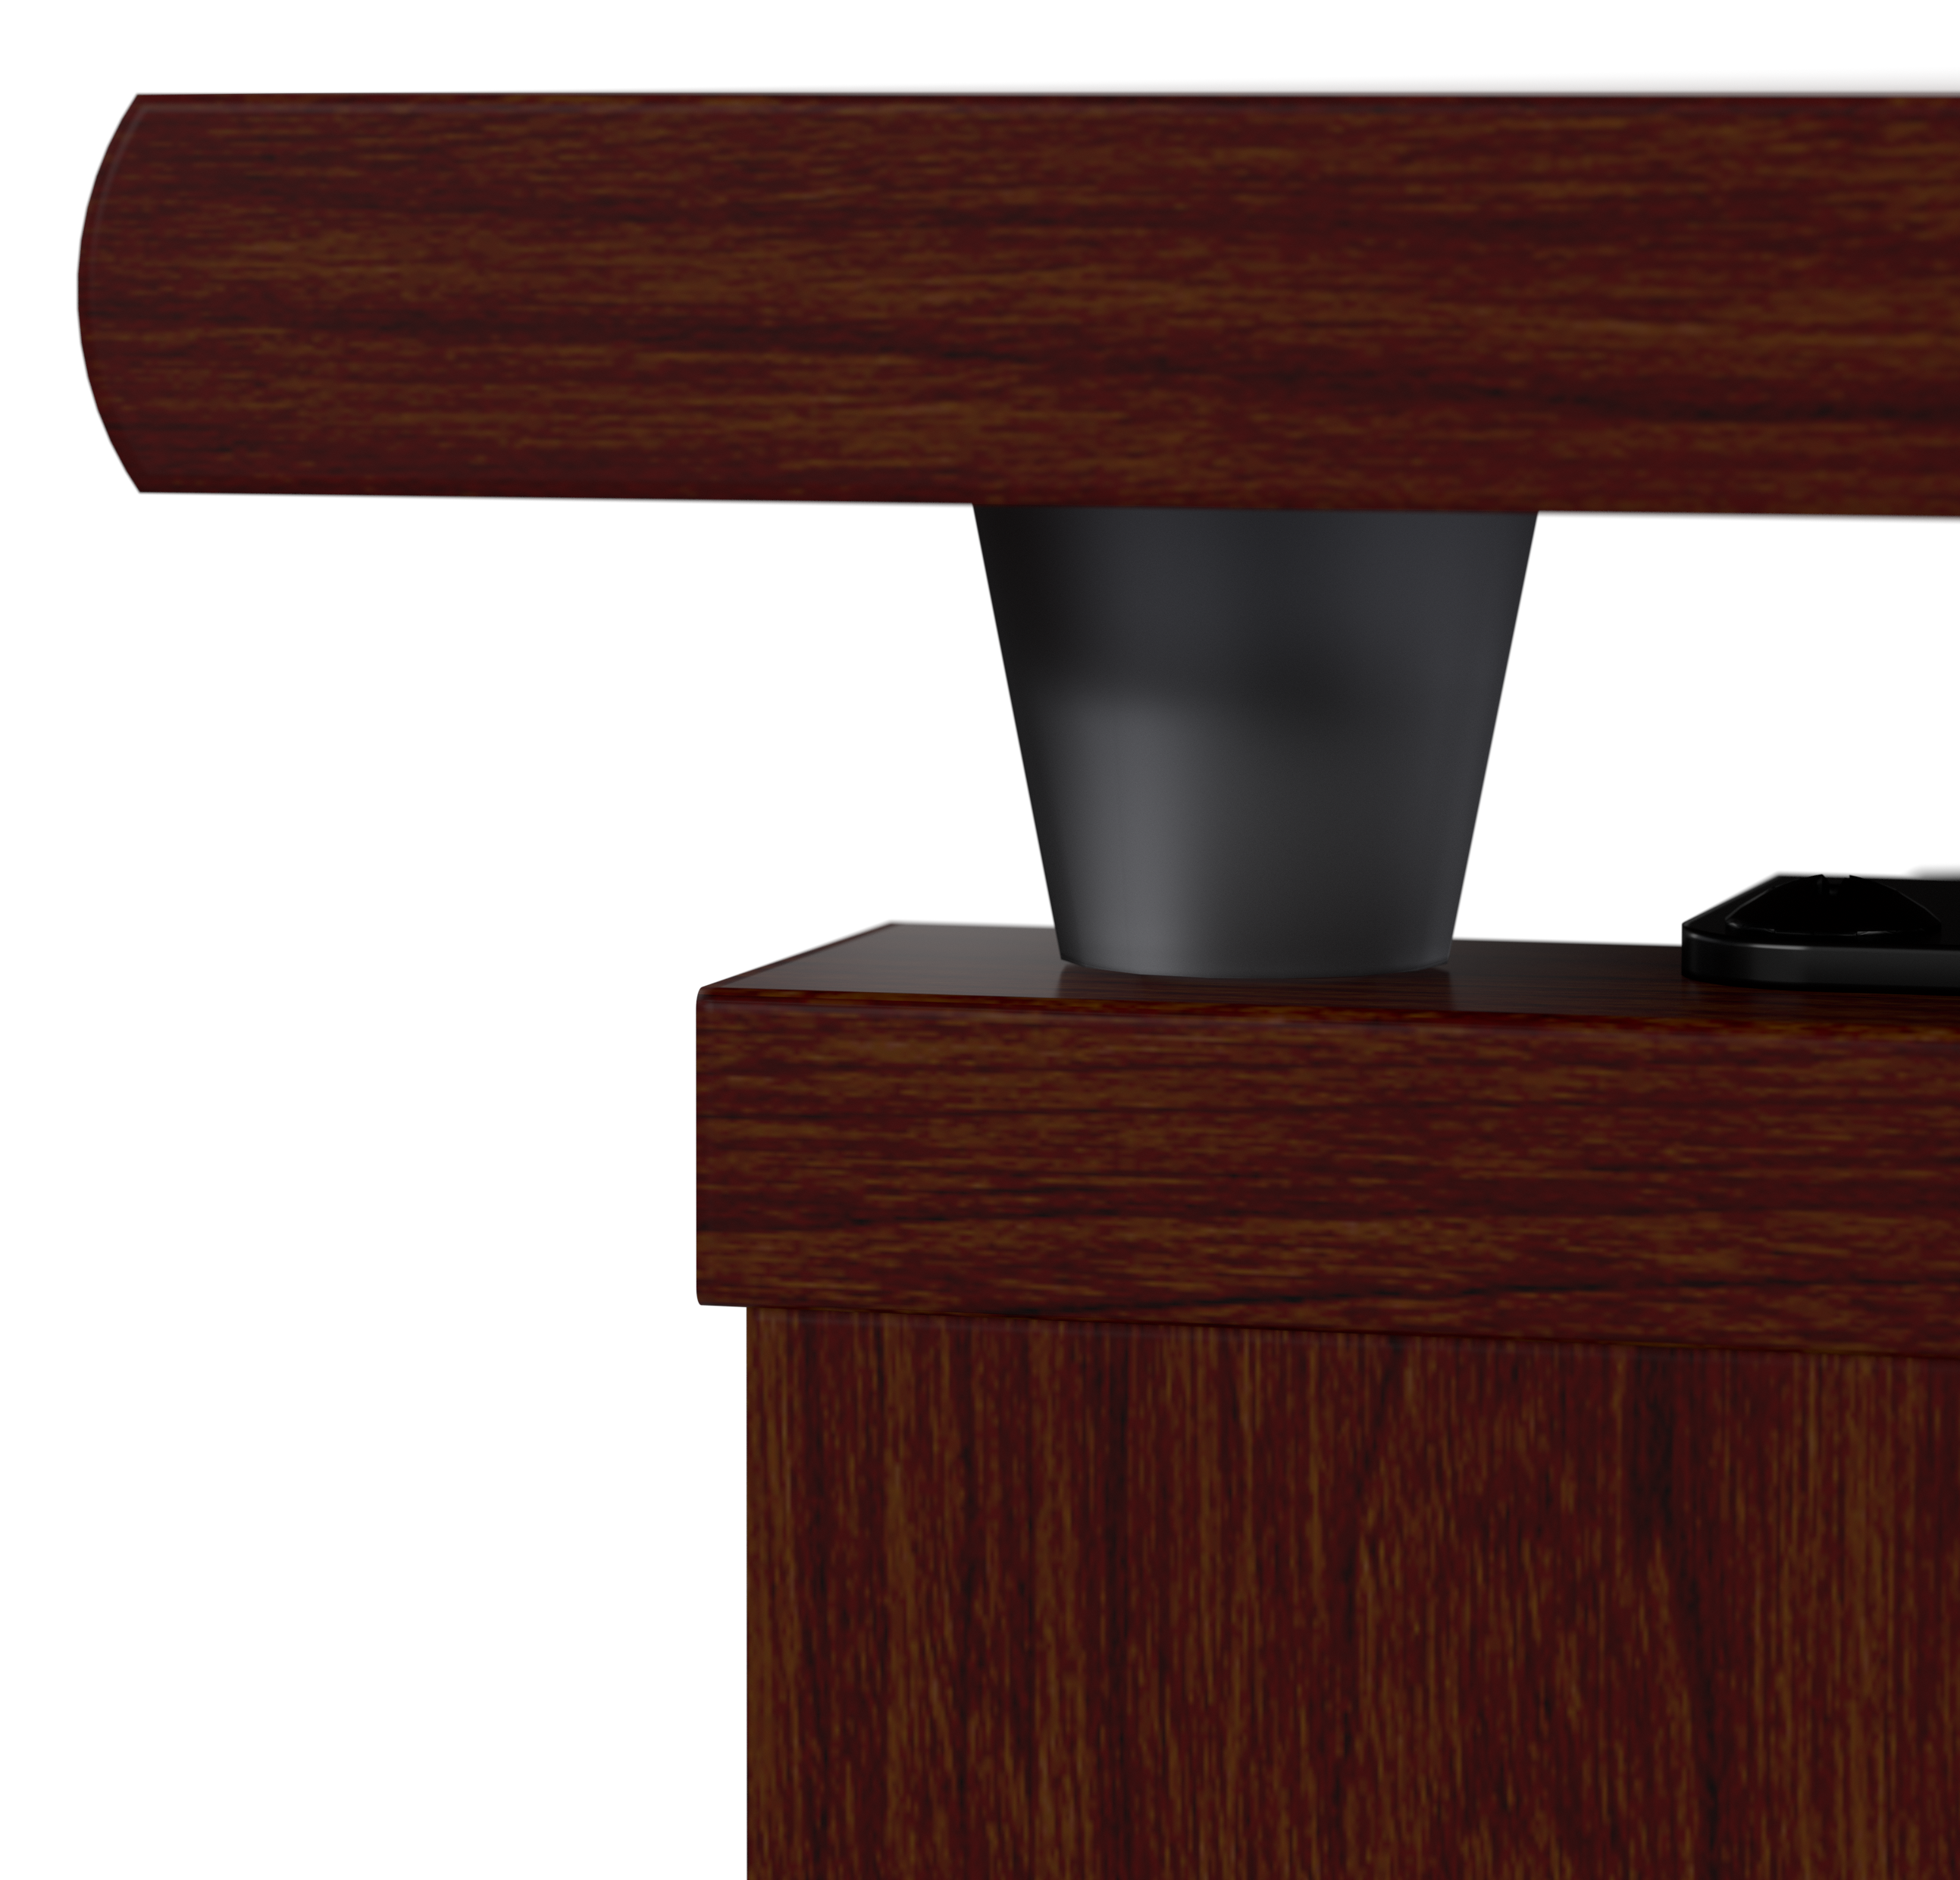 Shop Bush Furniture Cabot 60W 3 Position Sit to Stand L Shaped Desk with Hutch 03 CAB045HVC #color_harvest cherry